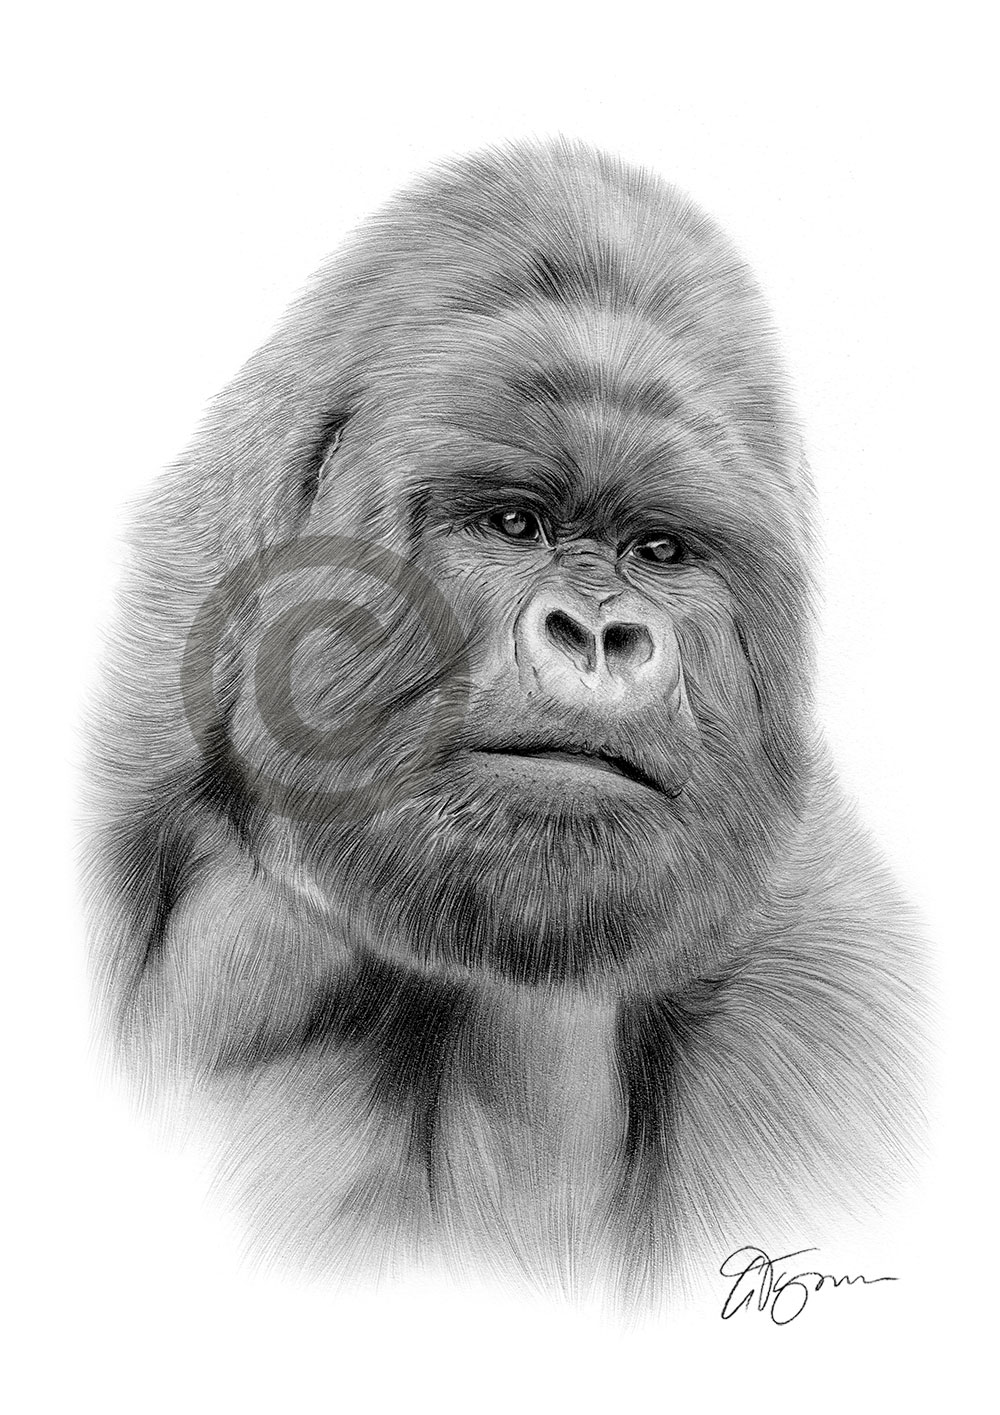 Pencil drawing of a silverback gorilla by artist Gary Tymon